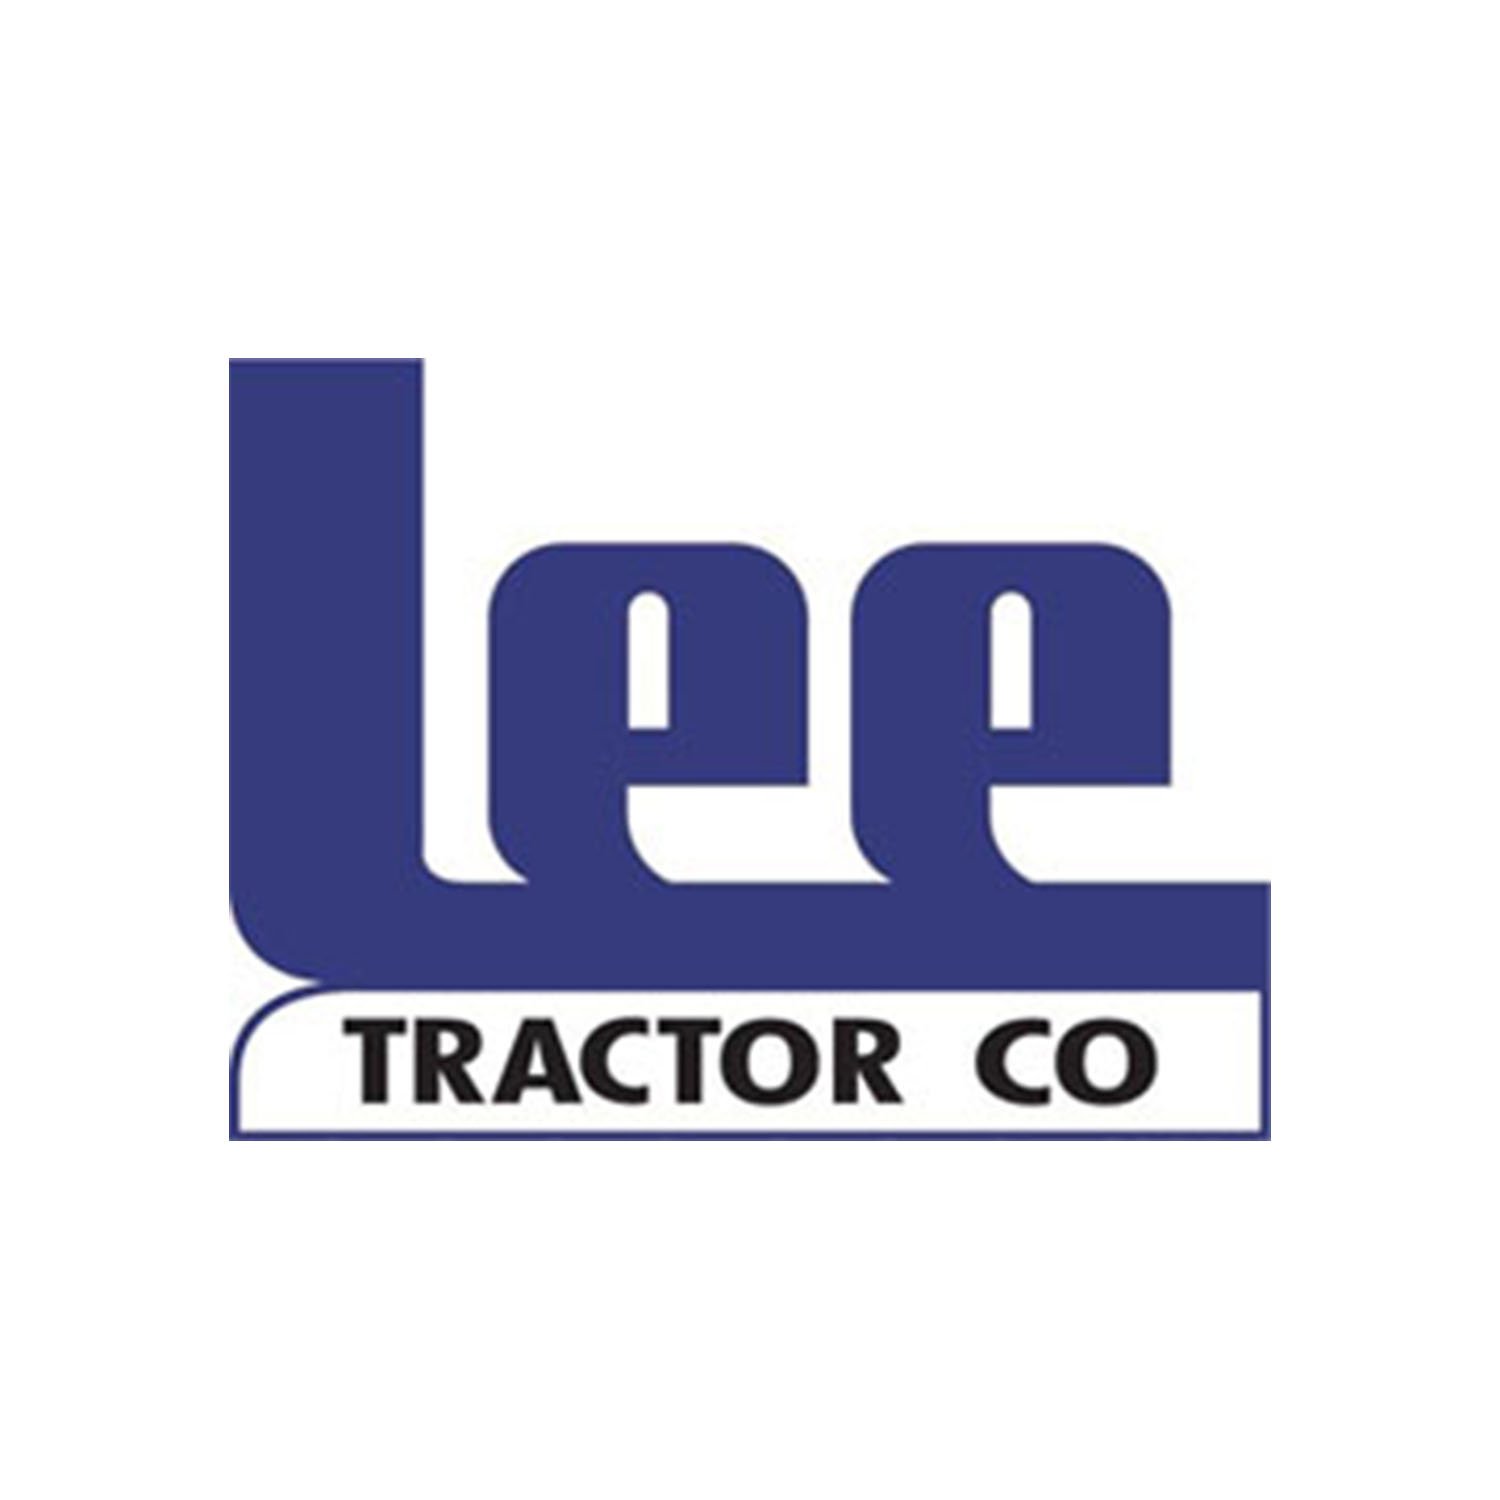 Lee Tractor.jpg